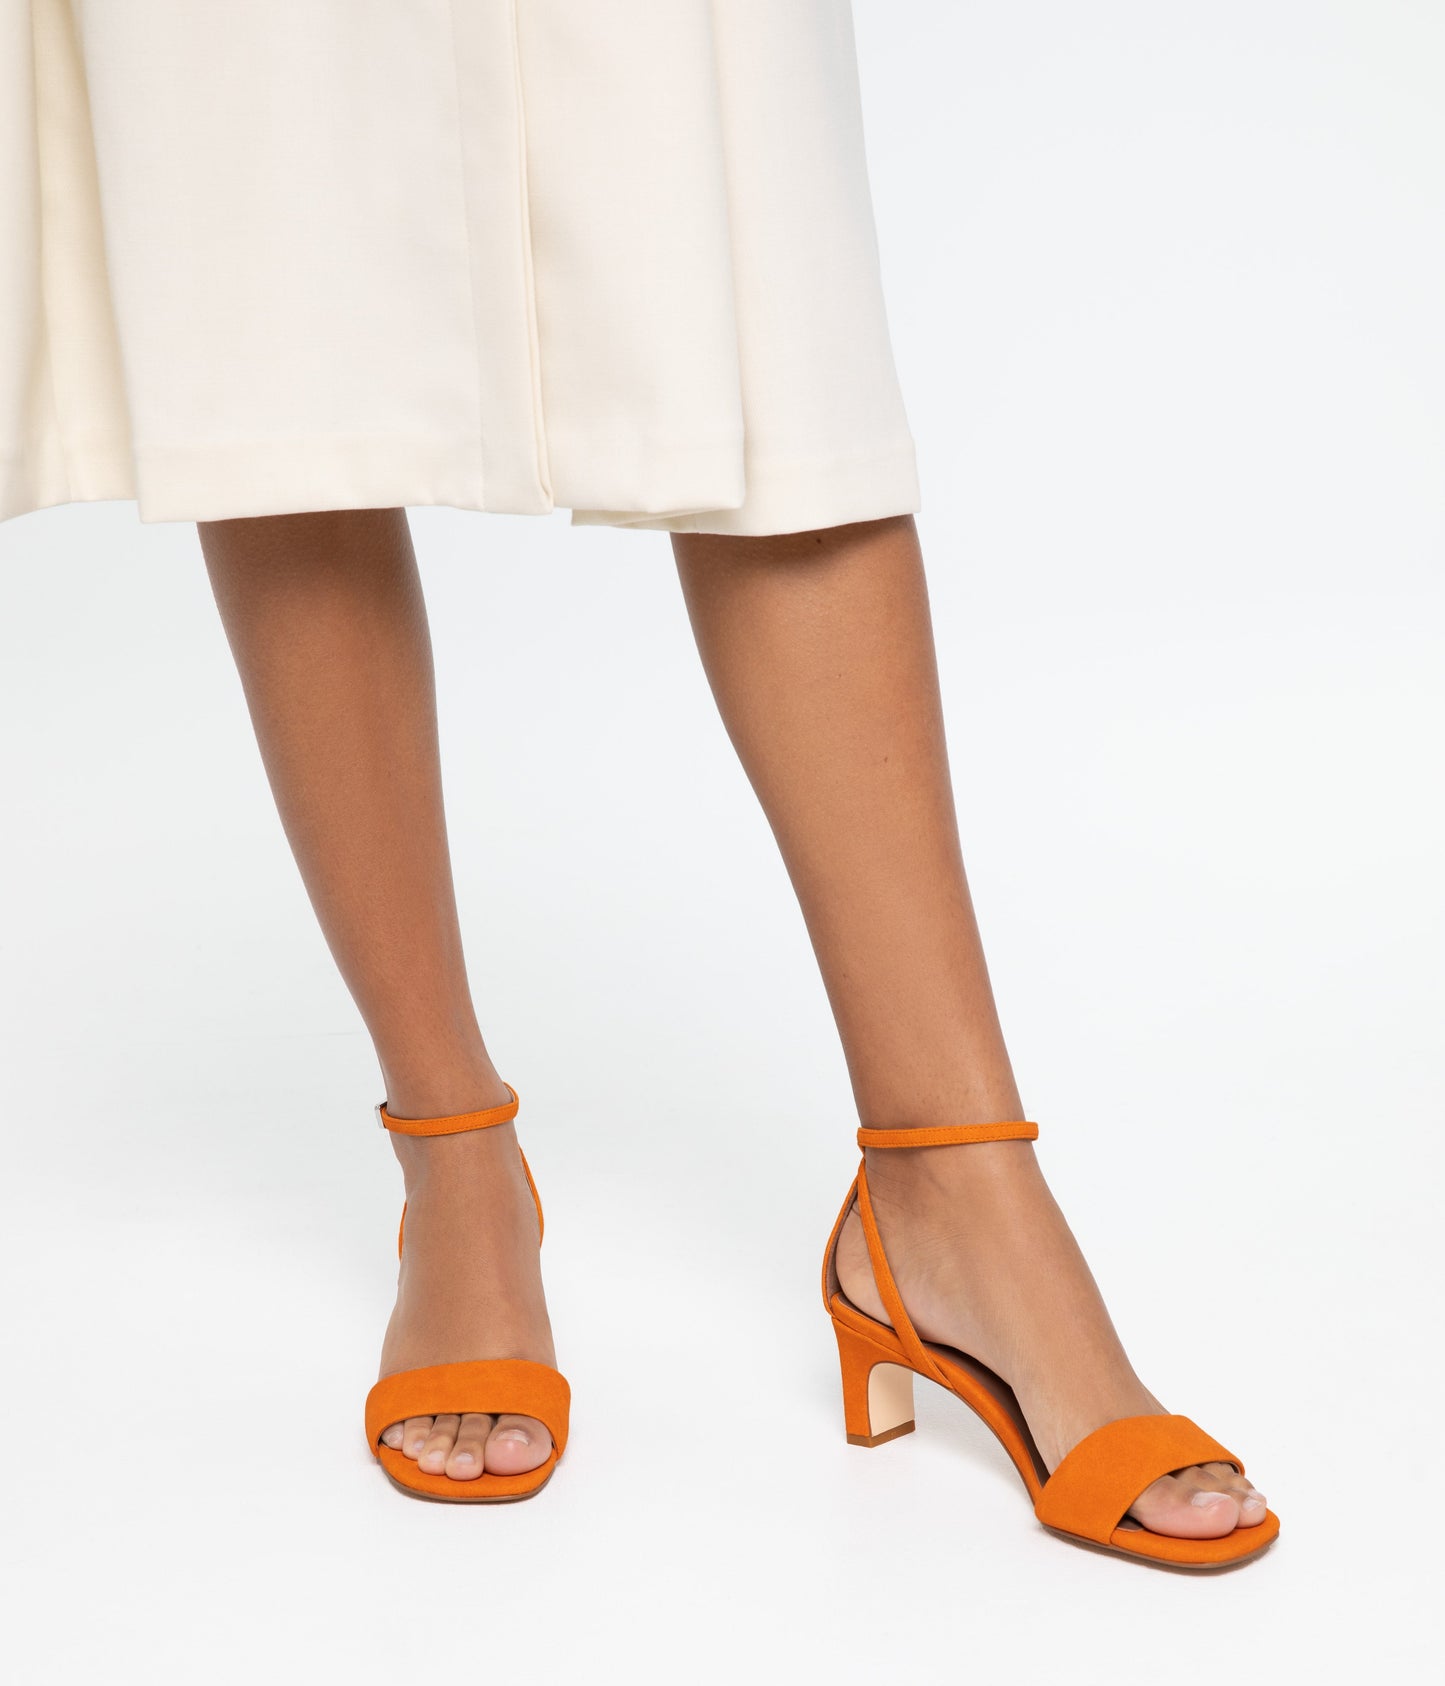 ELODIE Women's Vegan High Heel Sandals | Color: Orange - variant:orange